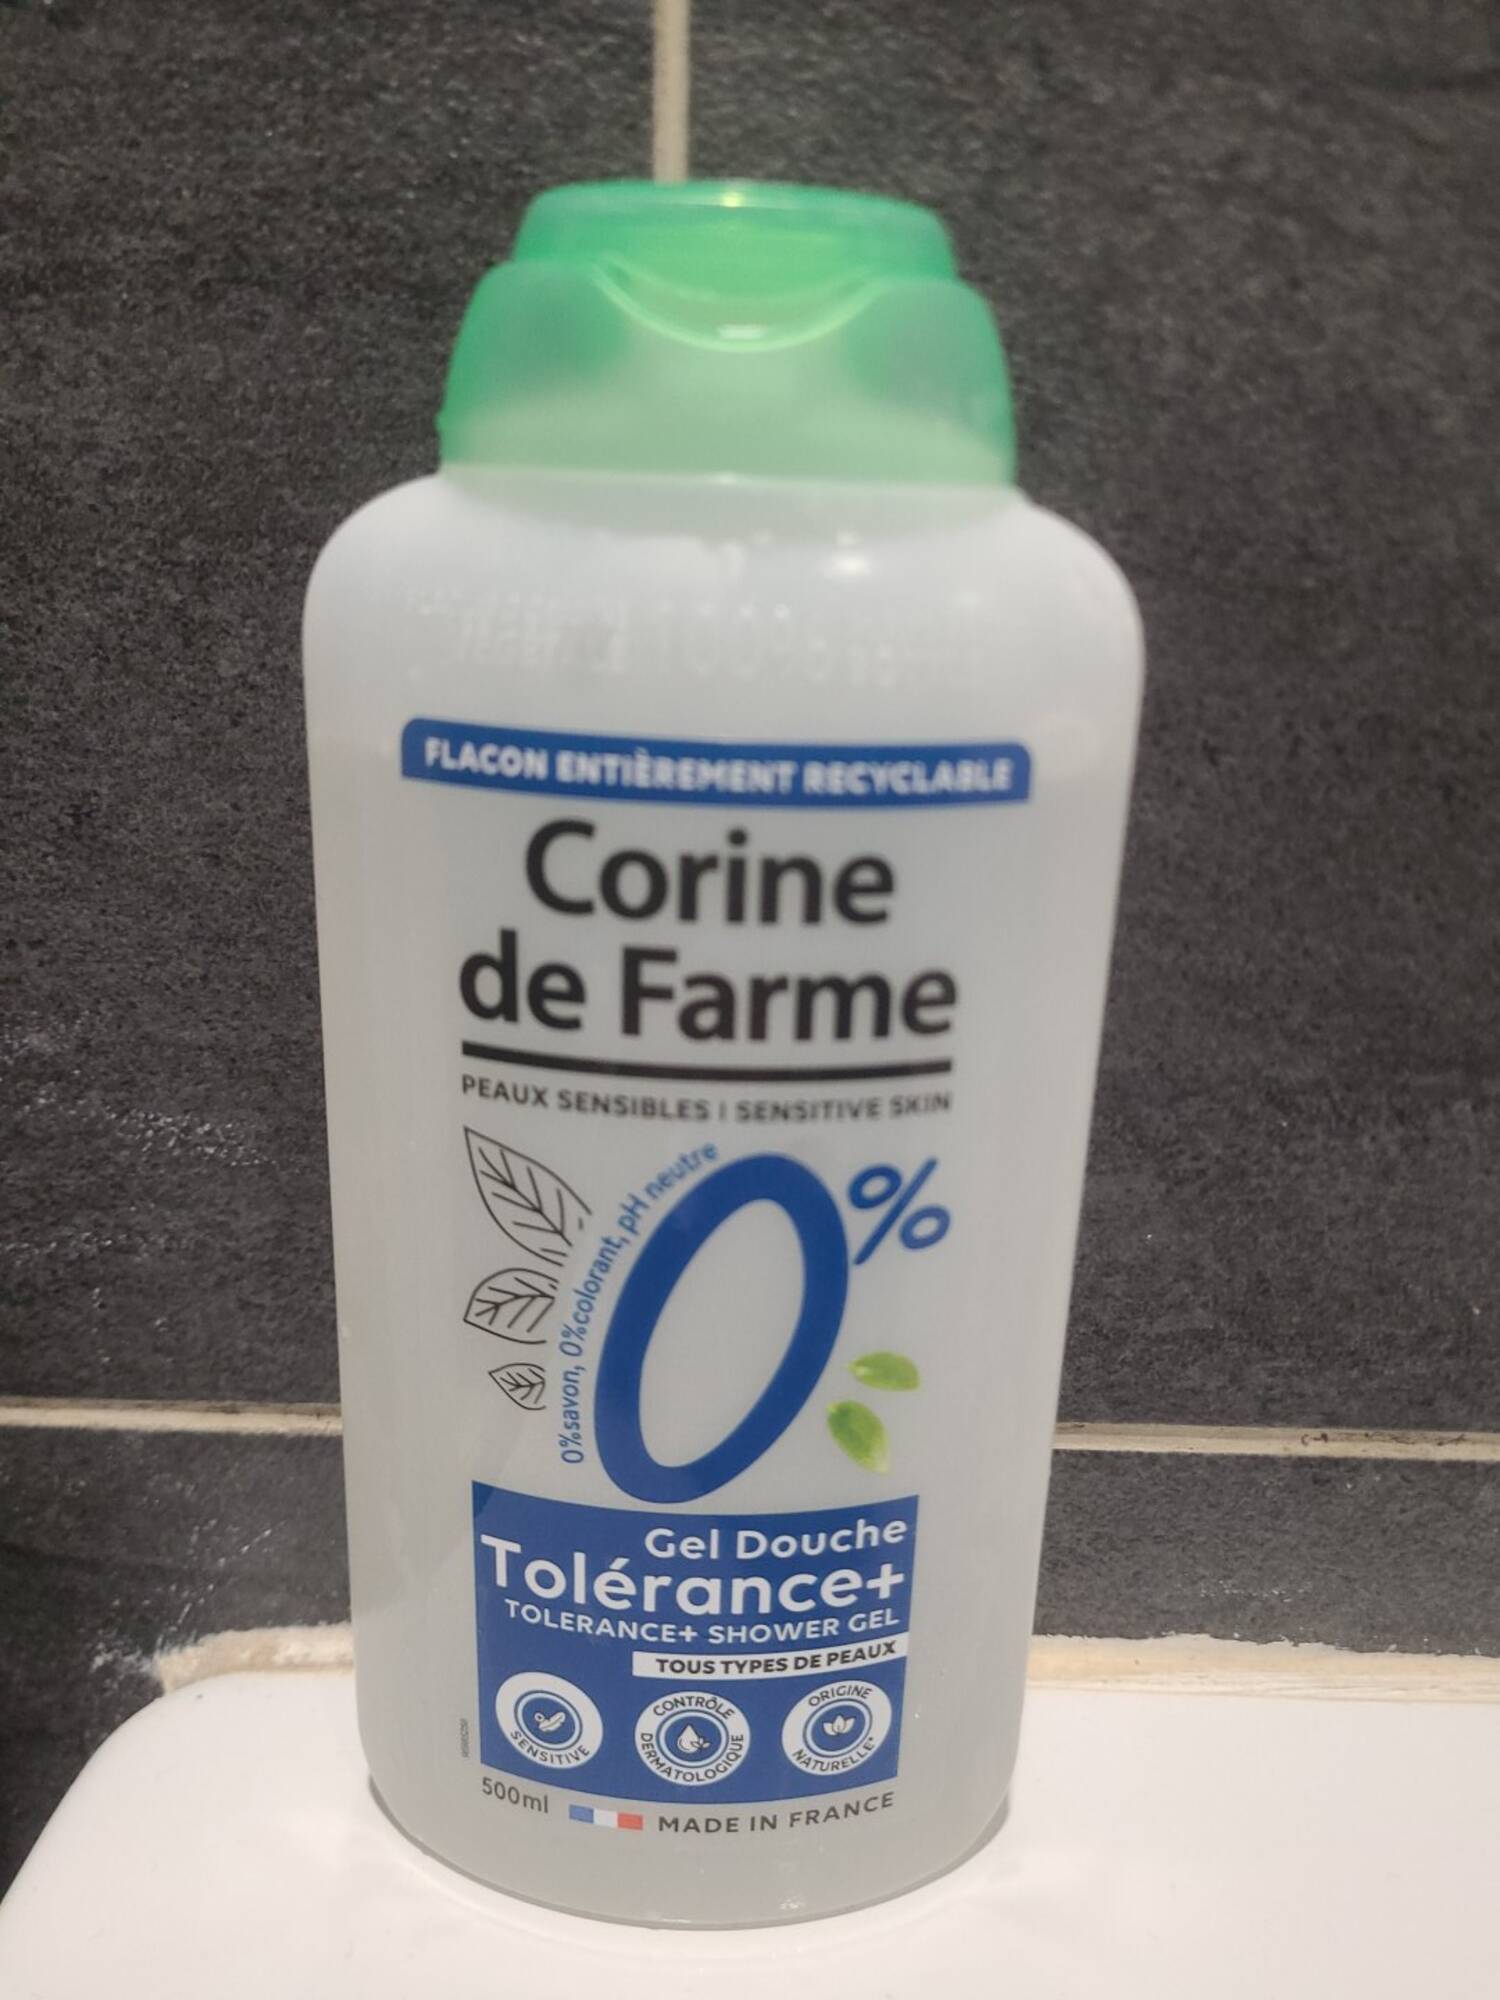 CORINE DE FARME - Gel douche tolerance+